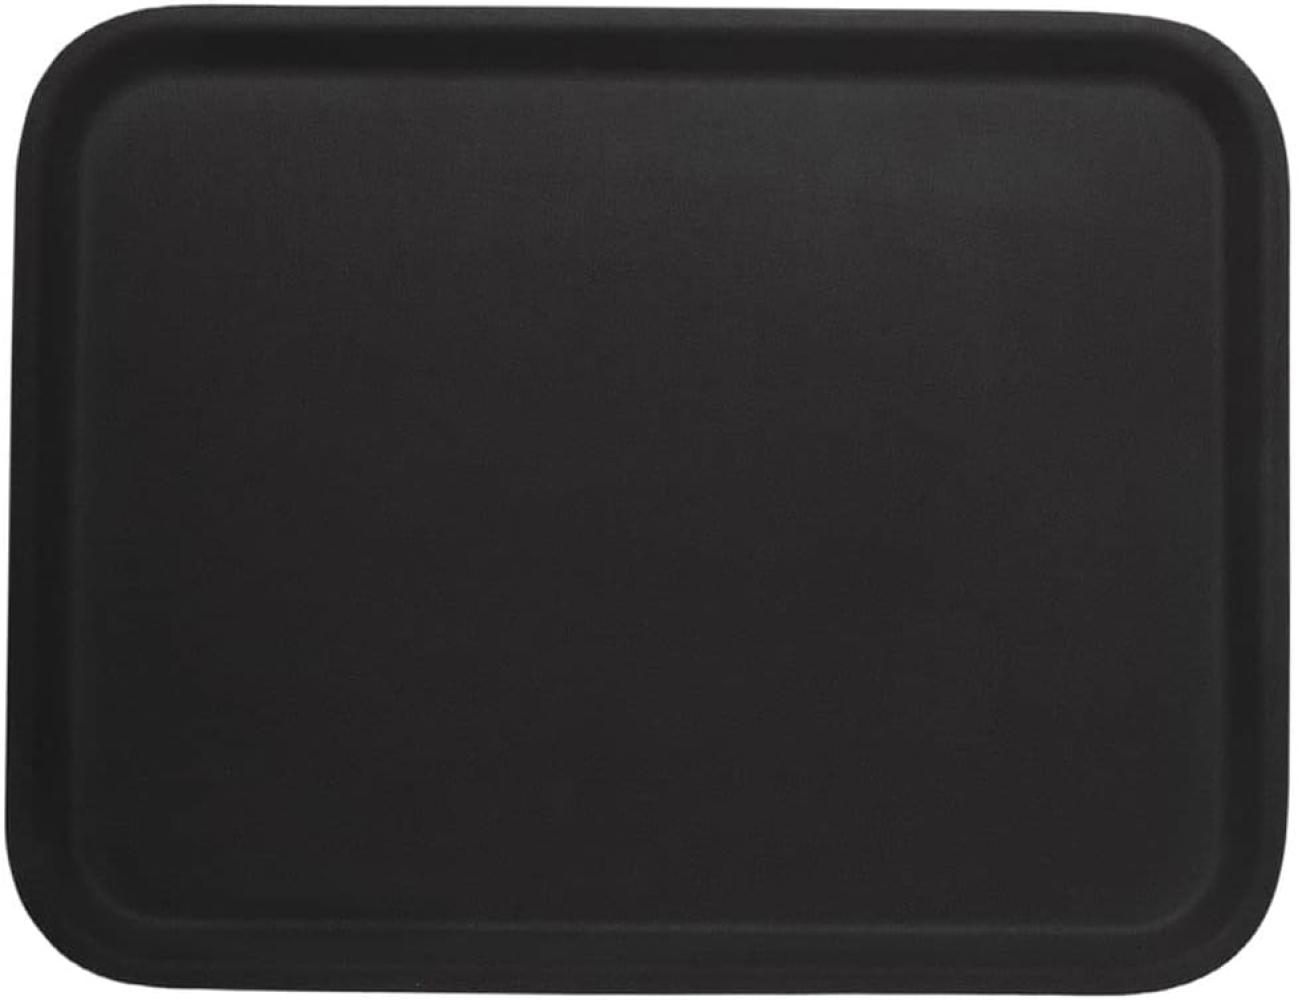 Contacto Tablett, rechteckig,rutschhemmend 61 x 43 cm, schwarz Bild 1